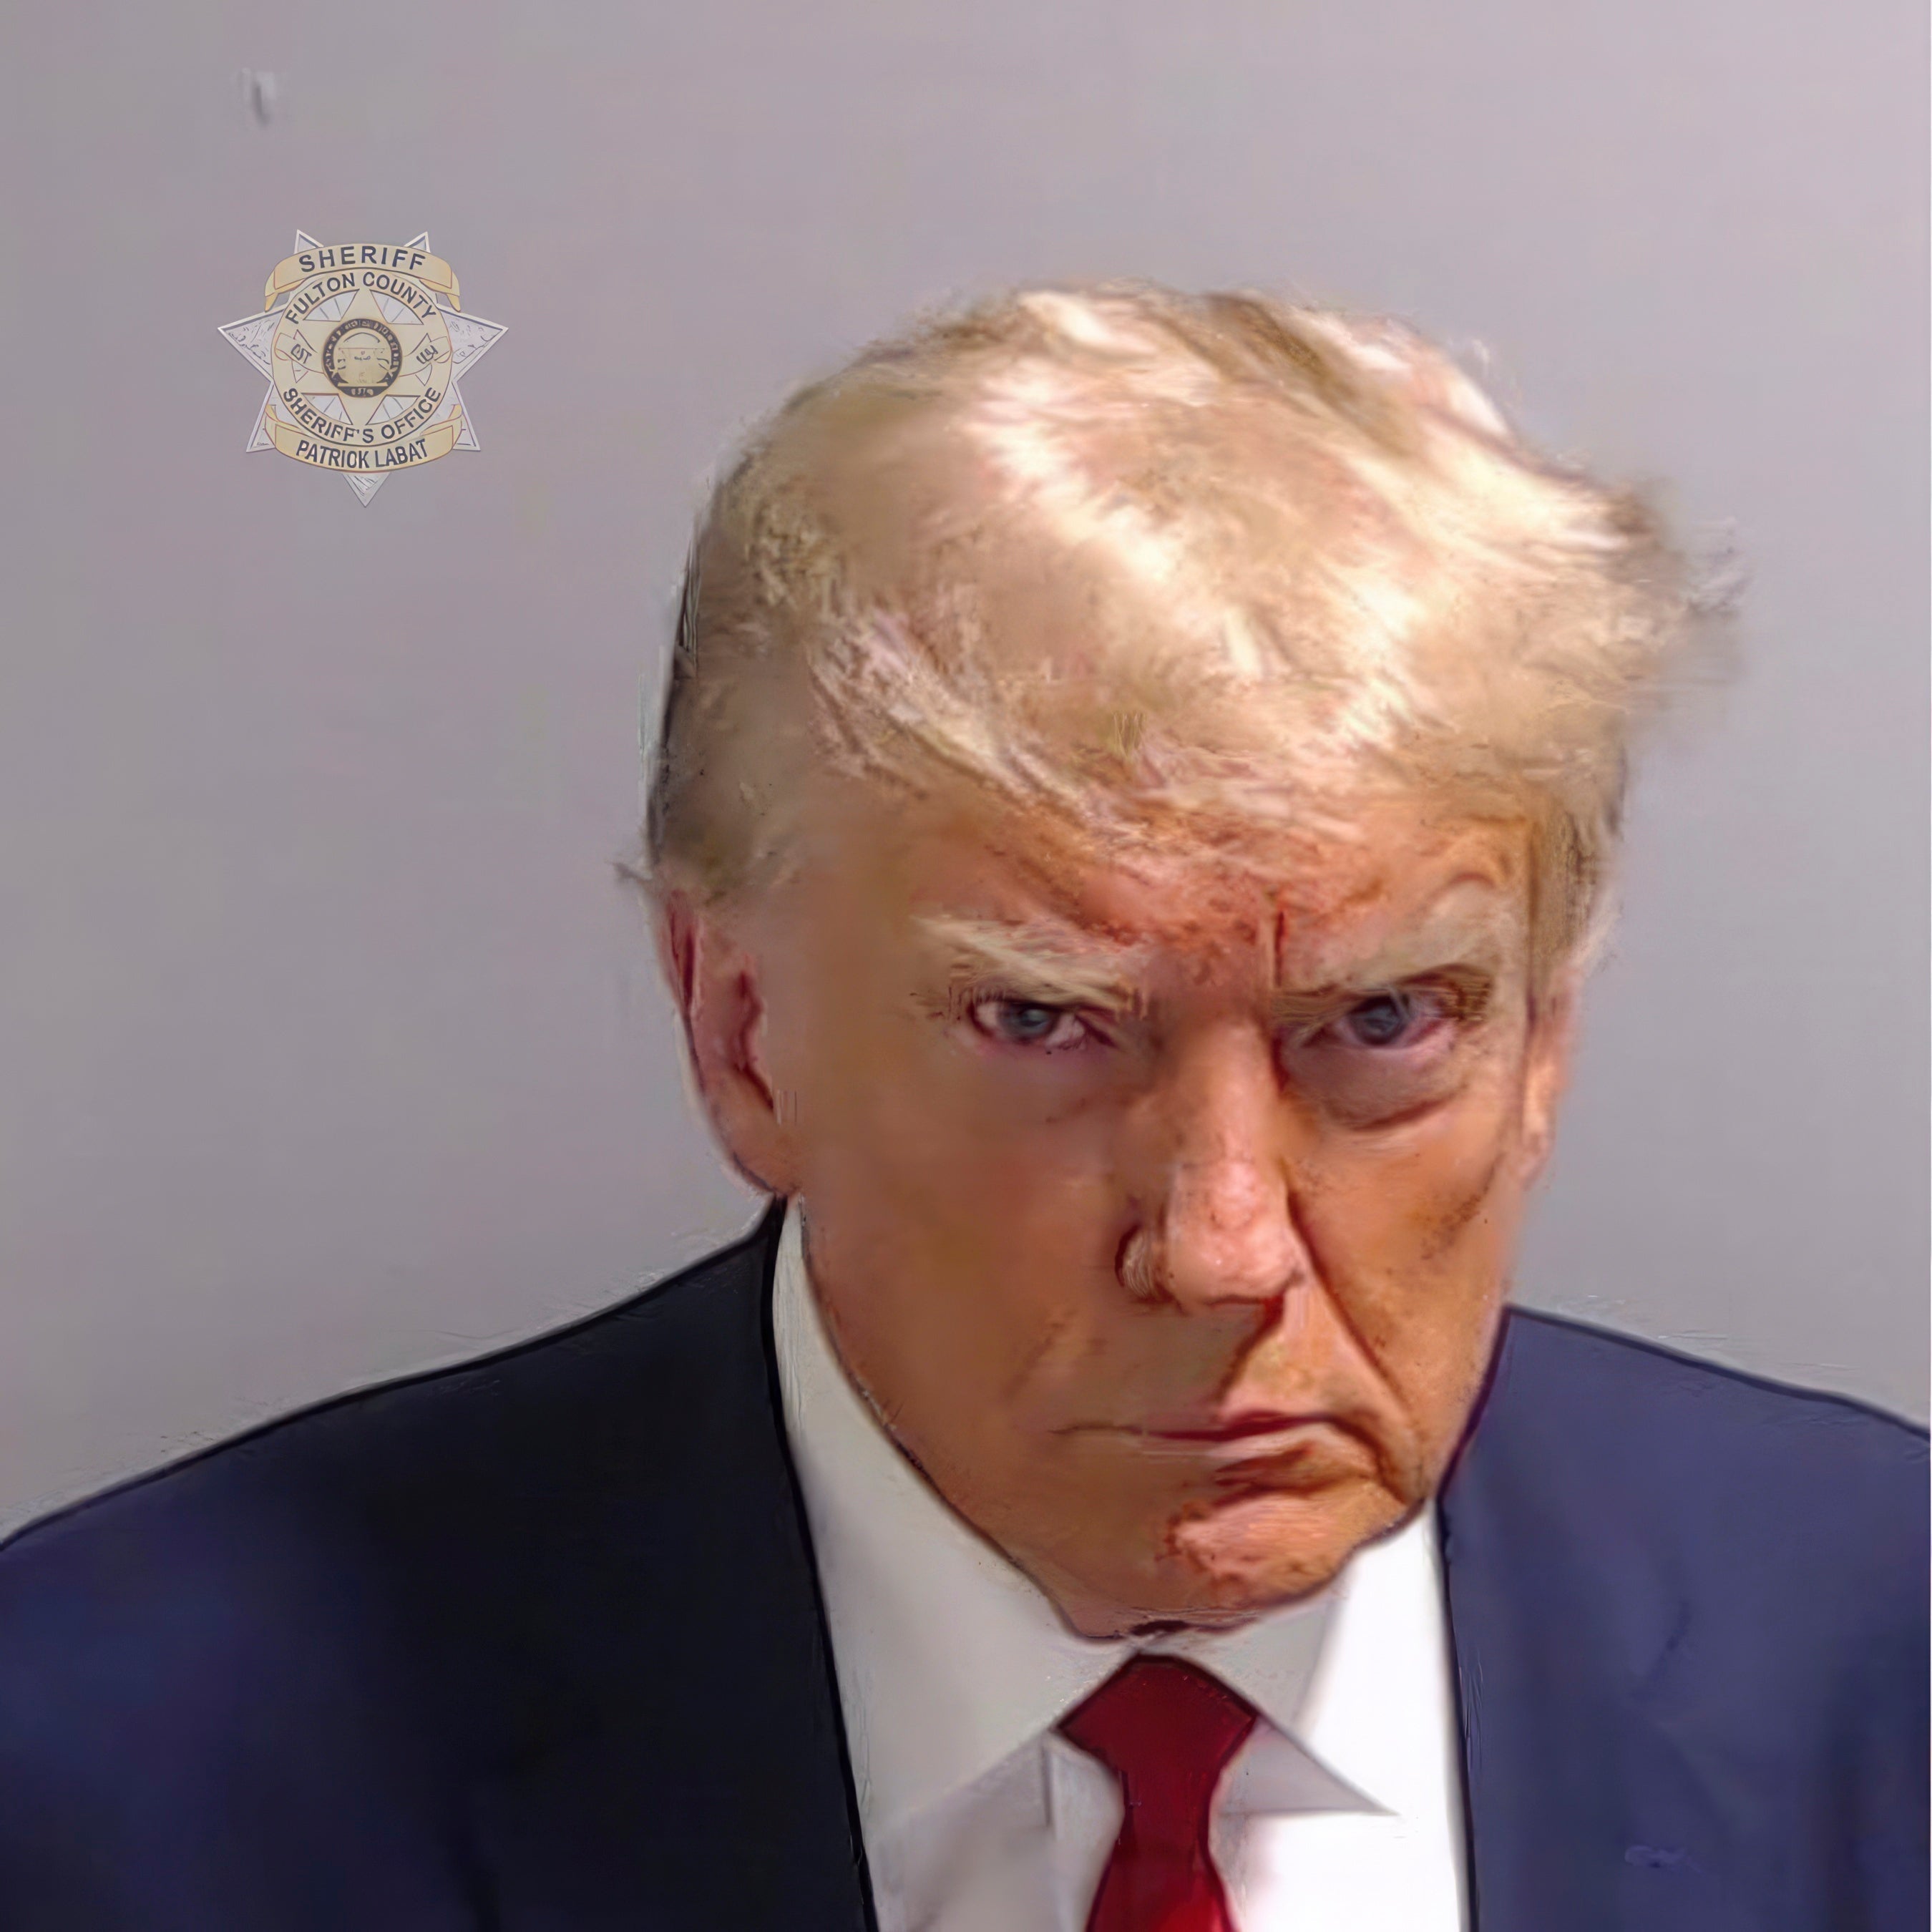 Donald Trump in mug shot